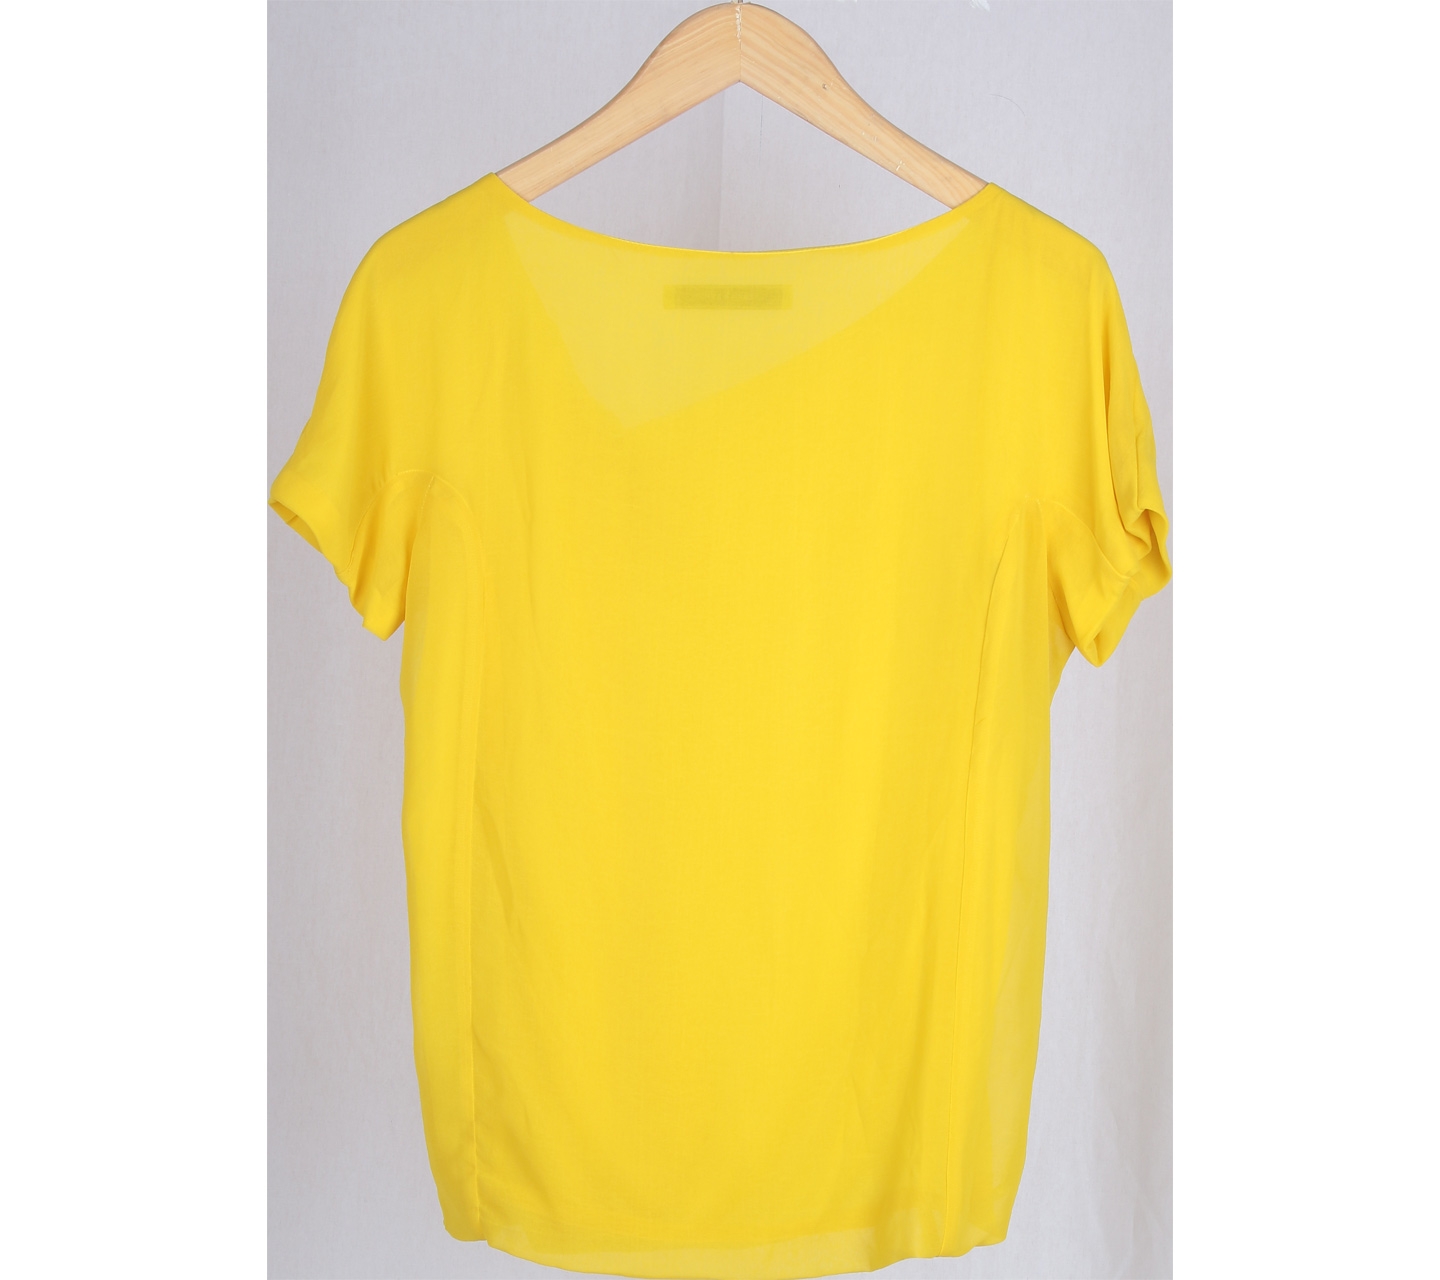 Zara Yellow Blouse